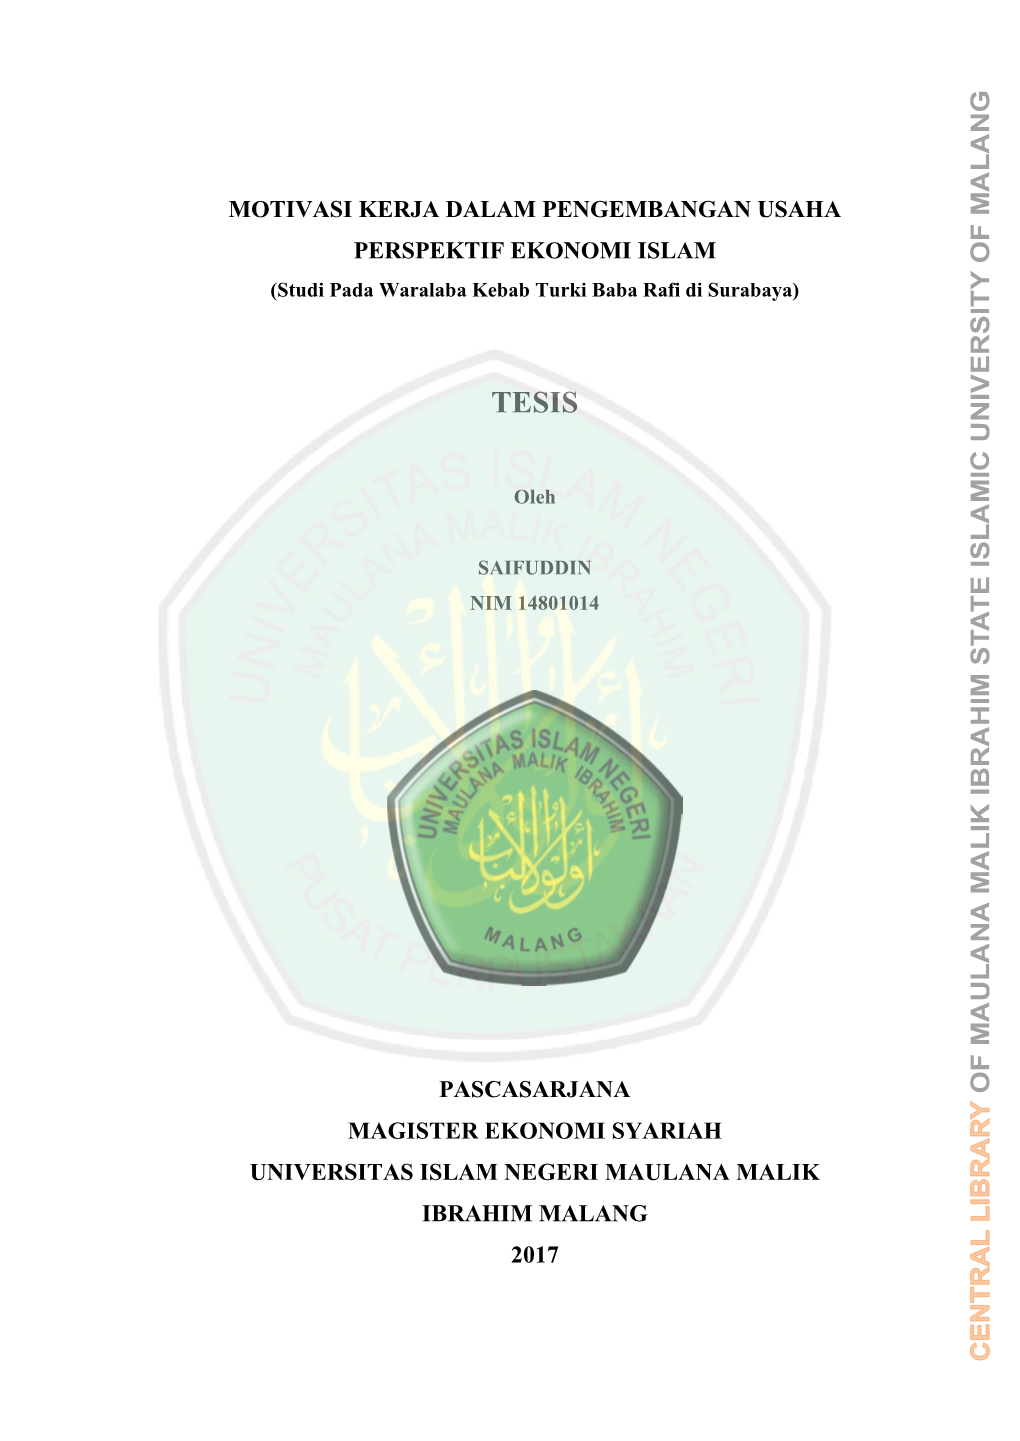 MOTIVASI KERJA DALAM PENGEMBANGAN USAHA PERSPEKTIF EKONOMI ISLAM (Studi Pada Waralaba Kebab Turki Baba Rafi Di Surabaya)